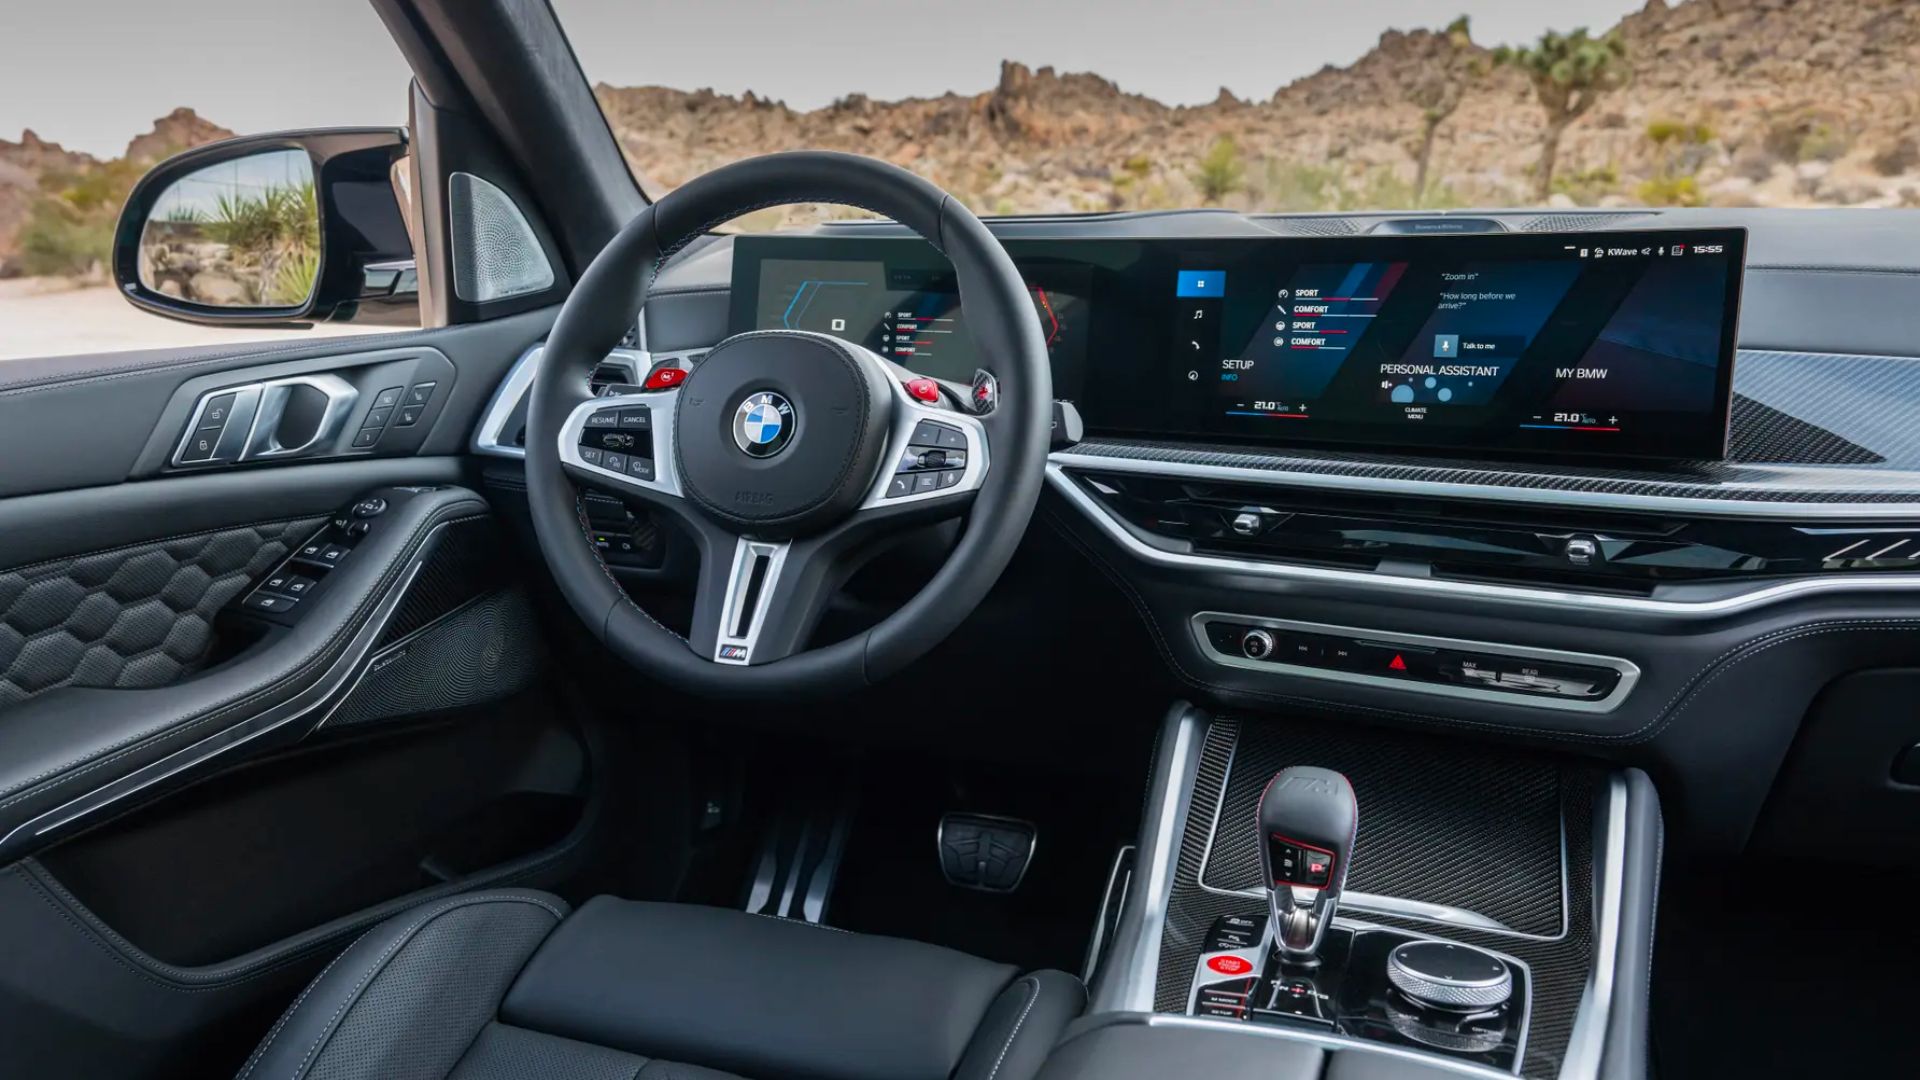 The new BMW X5 M interior